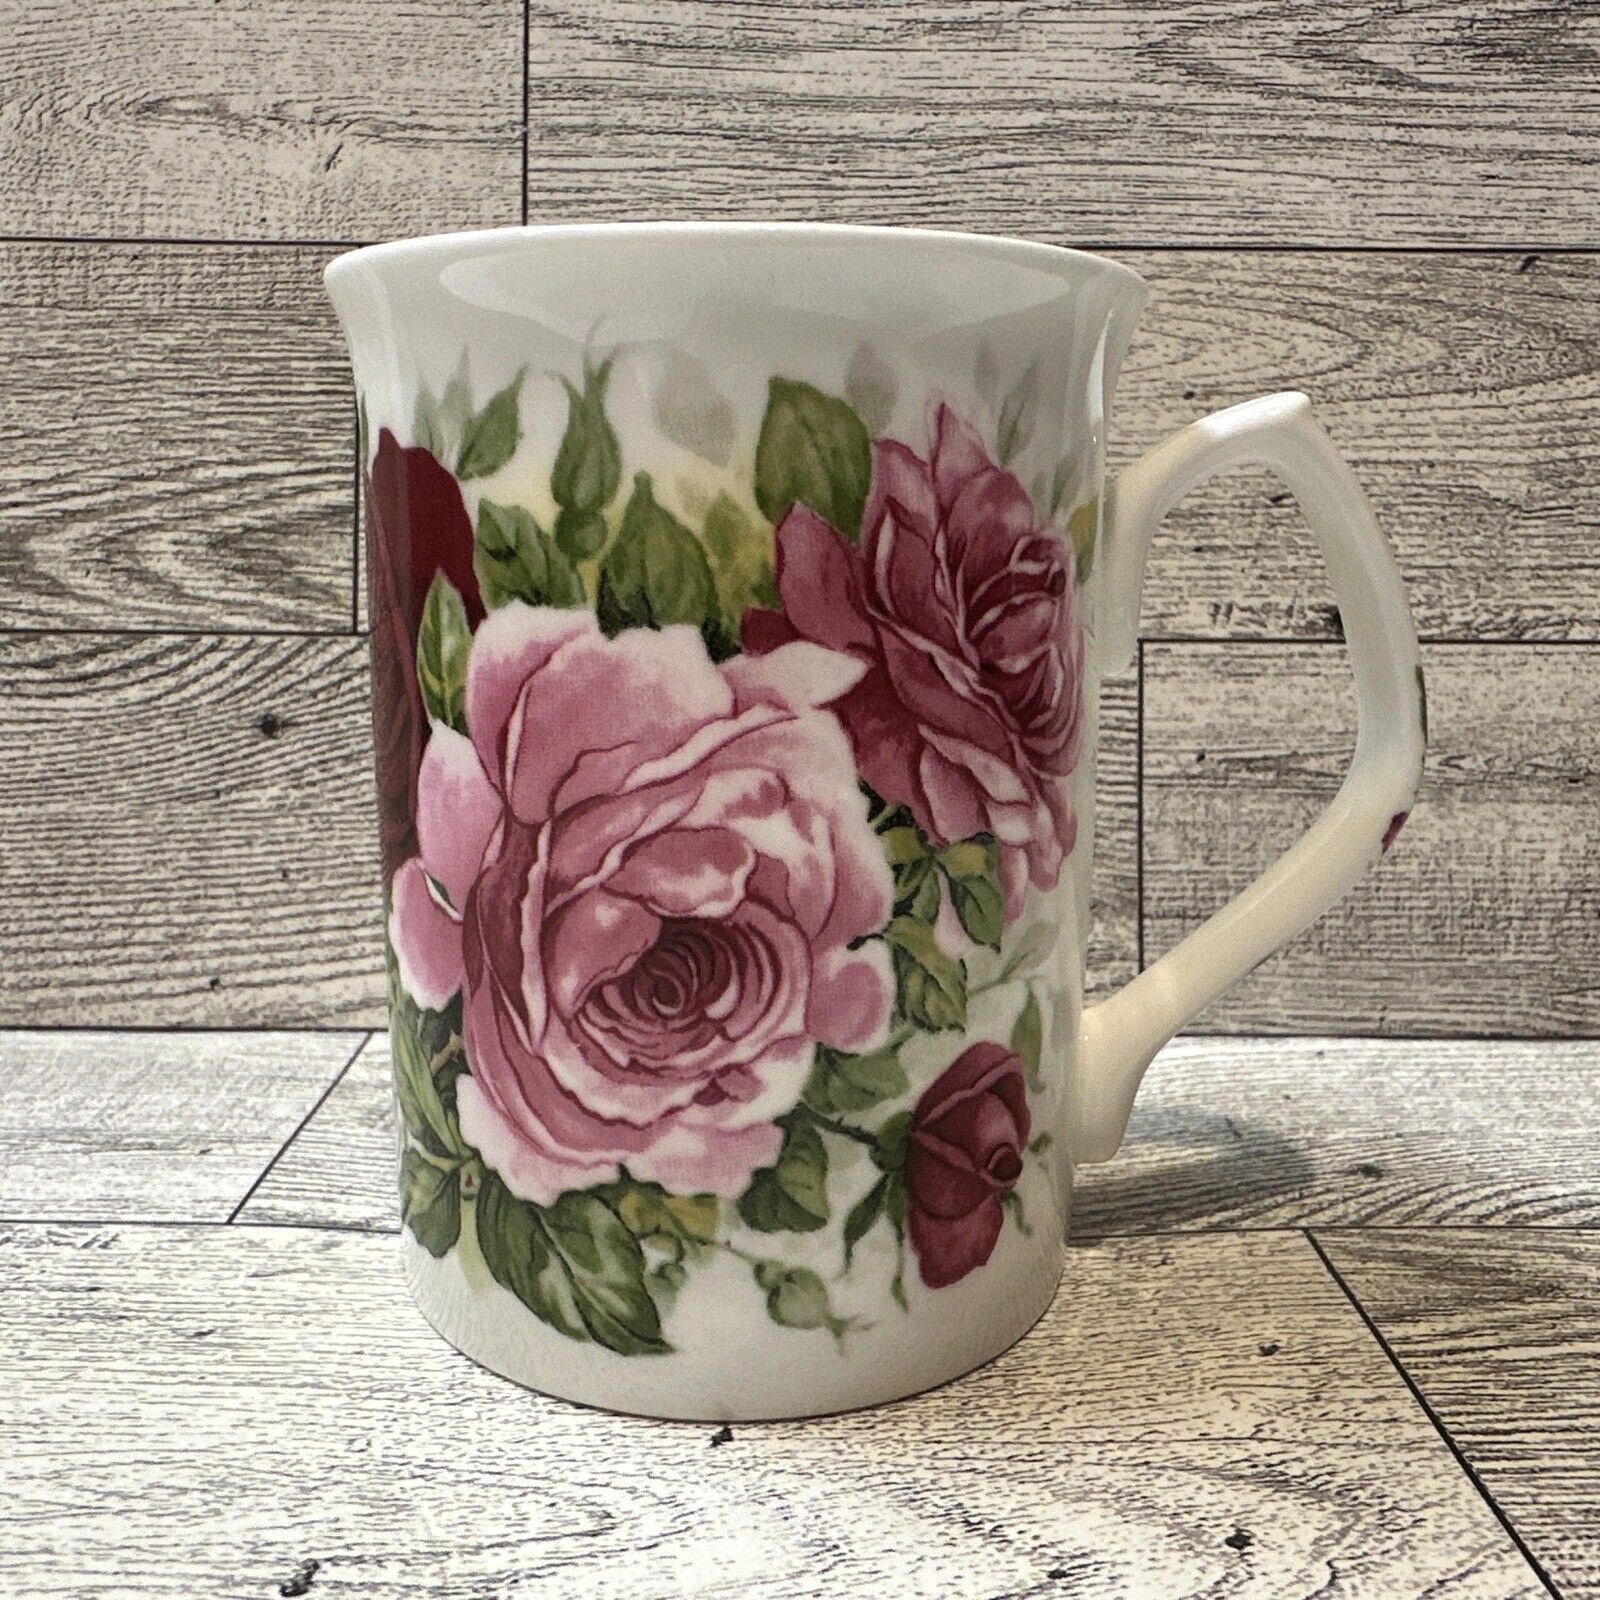 ROYALE GARDEN Bone China Staffs England 3.75x3” Coffee Mug Roses Vintage